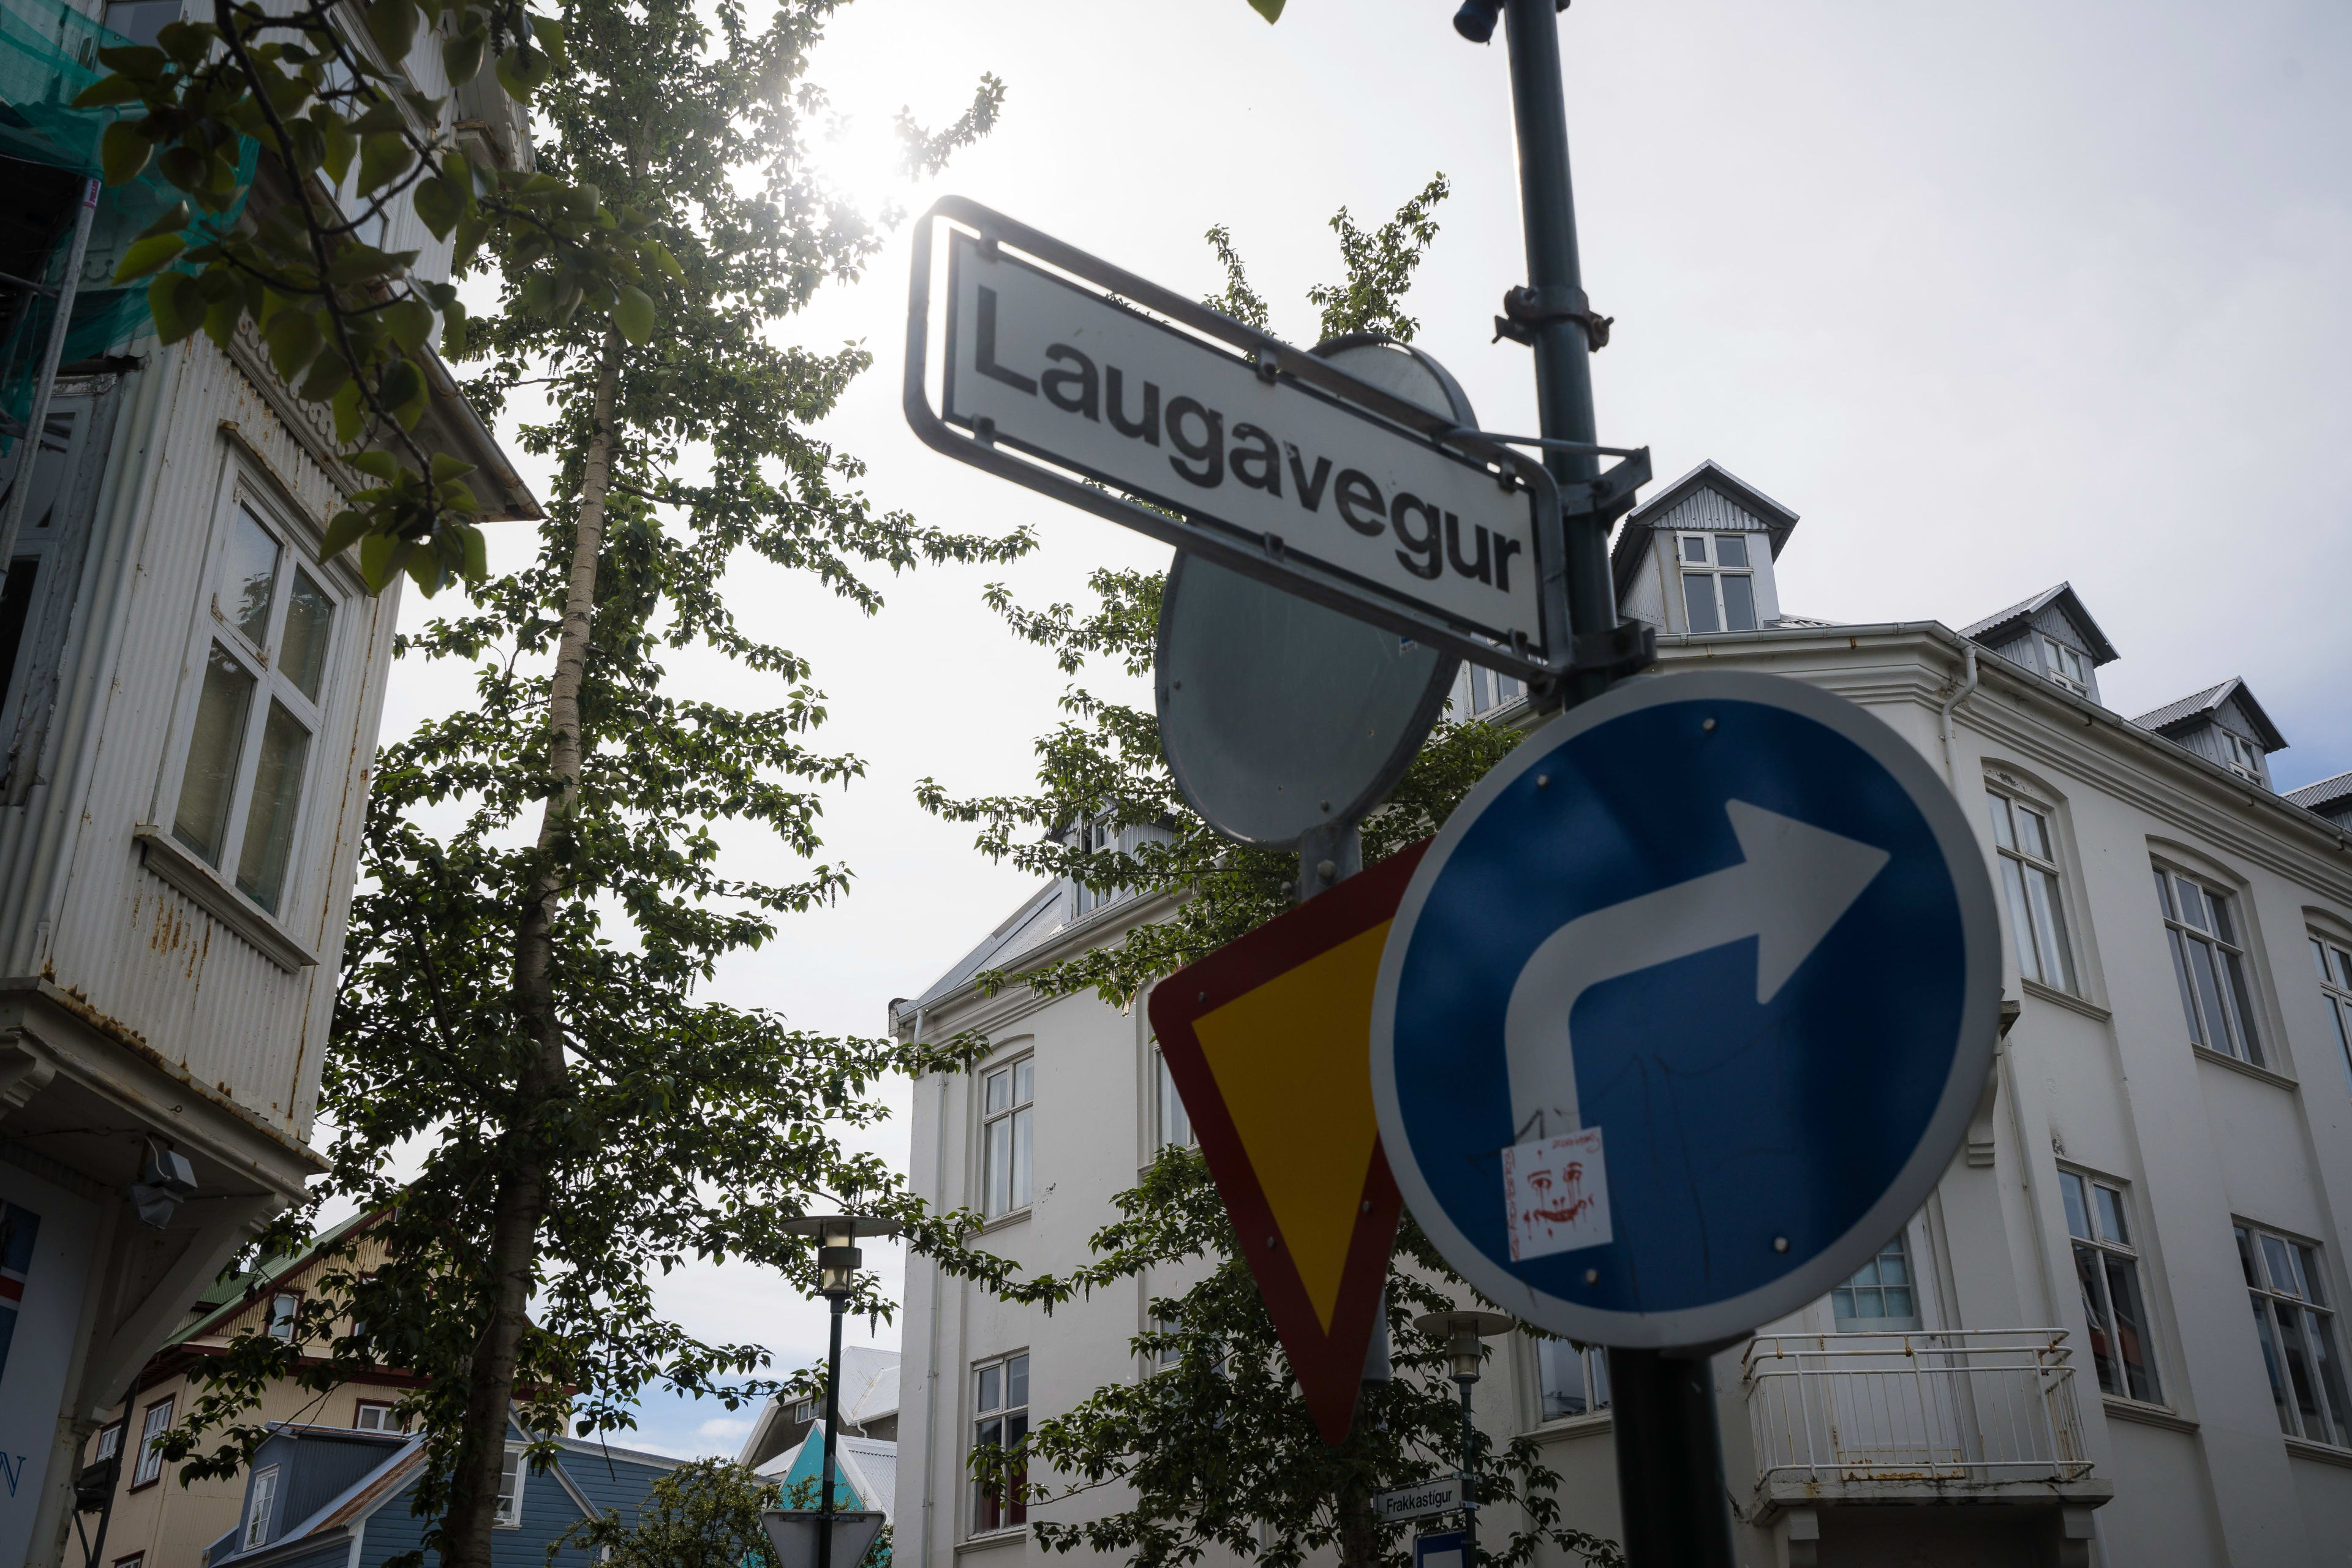 Laugavegur street sign of reykjavik